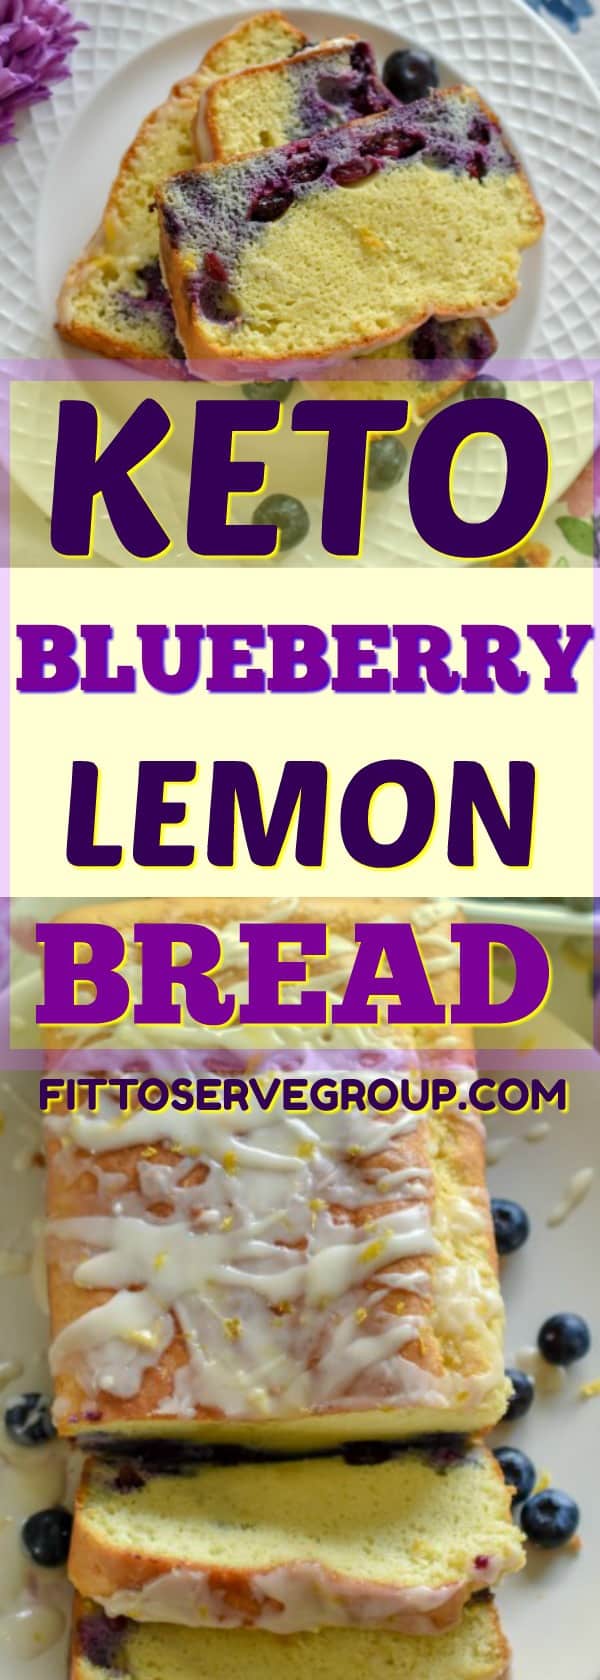 Keto Blueberry Lemon Bread · Fittoserve Group